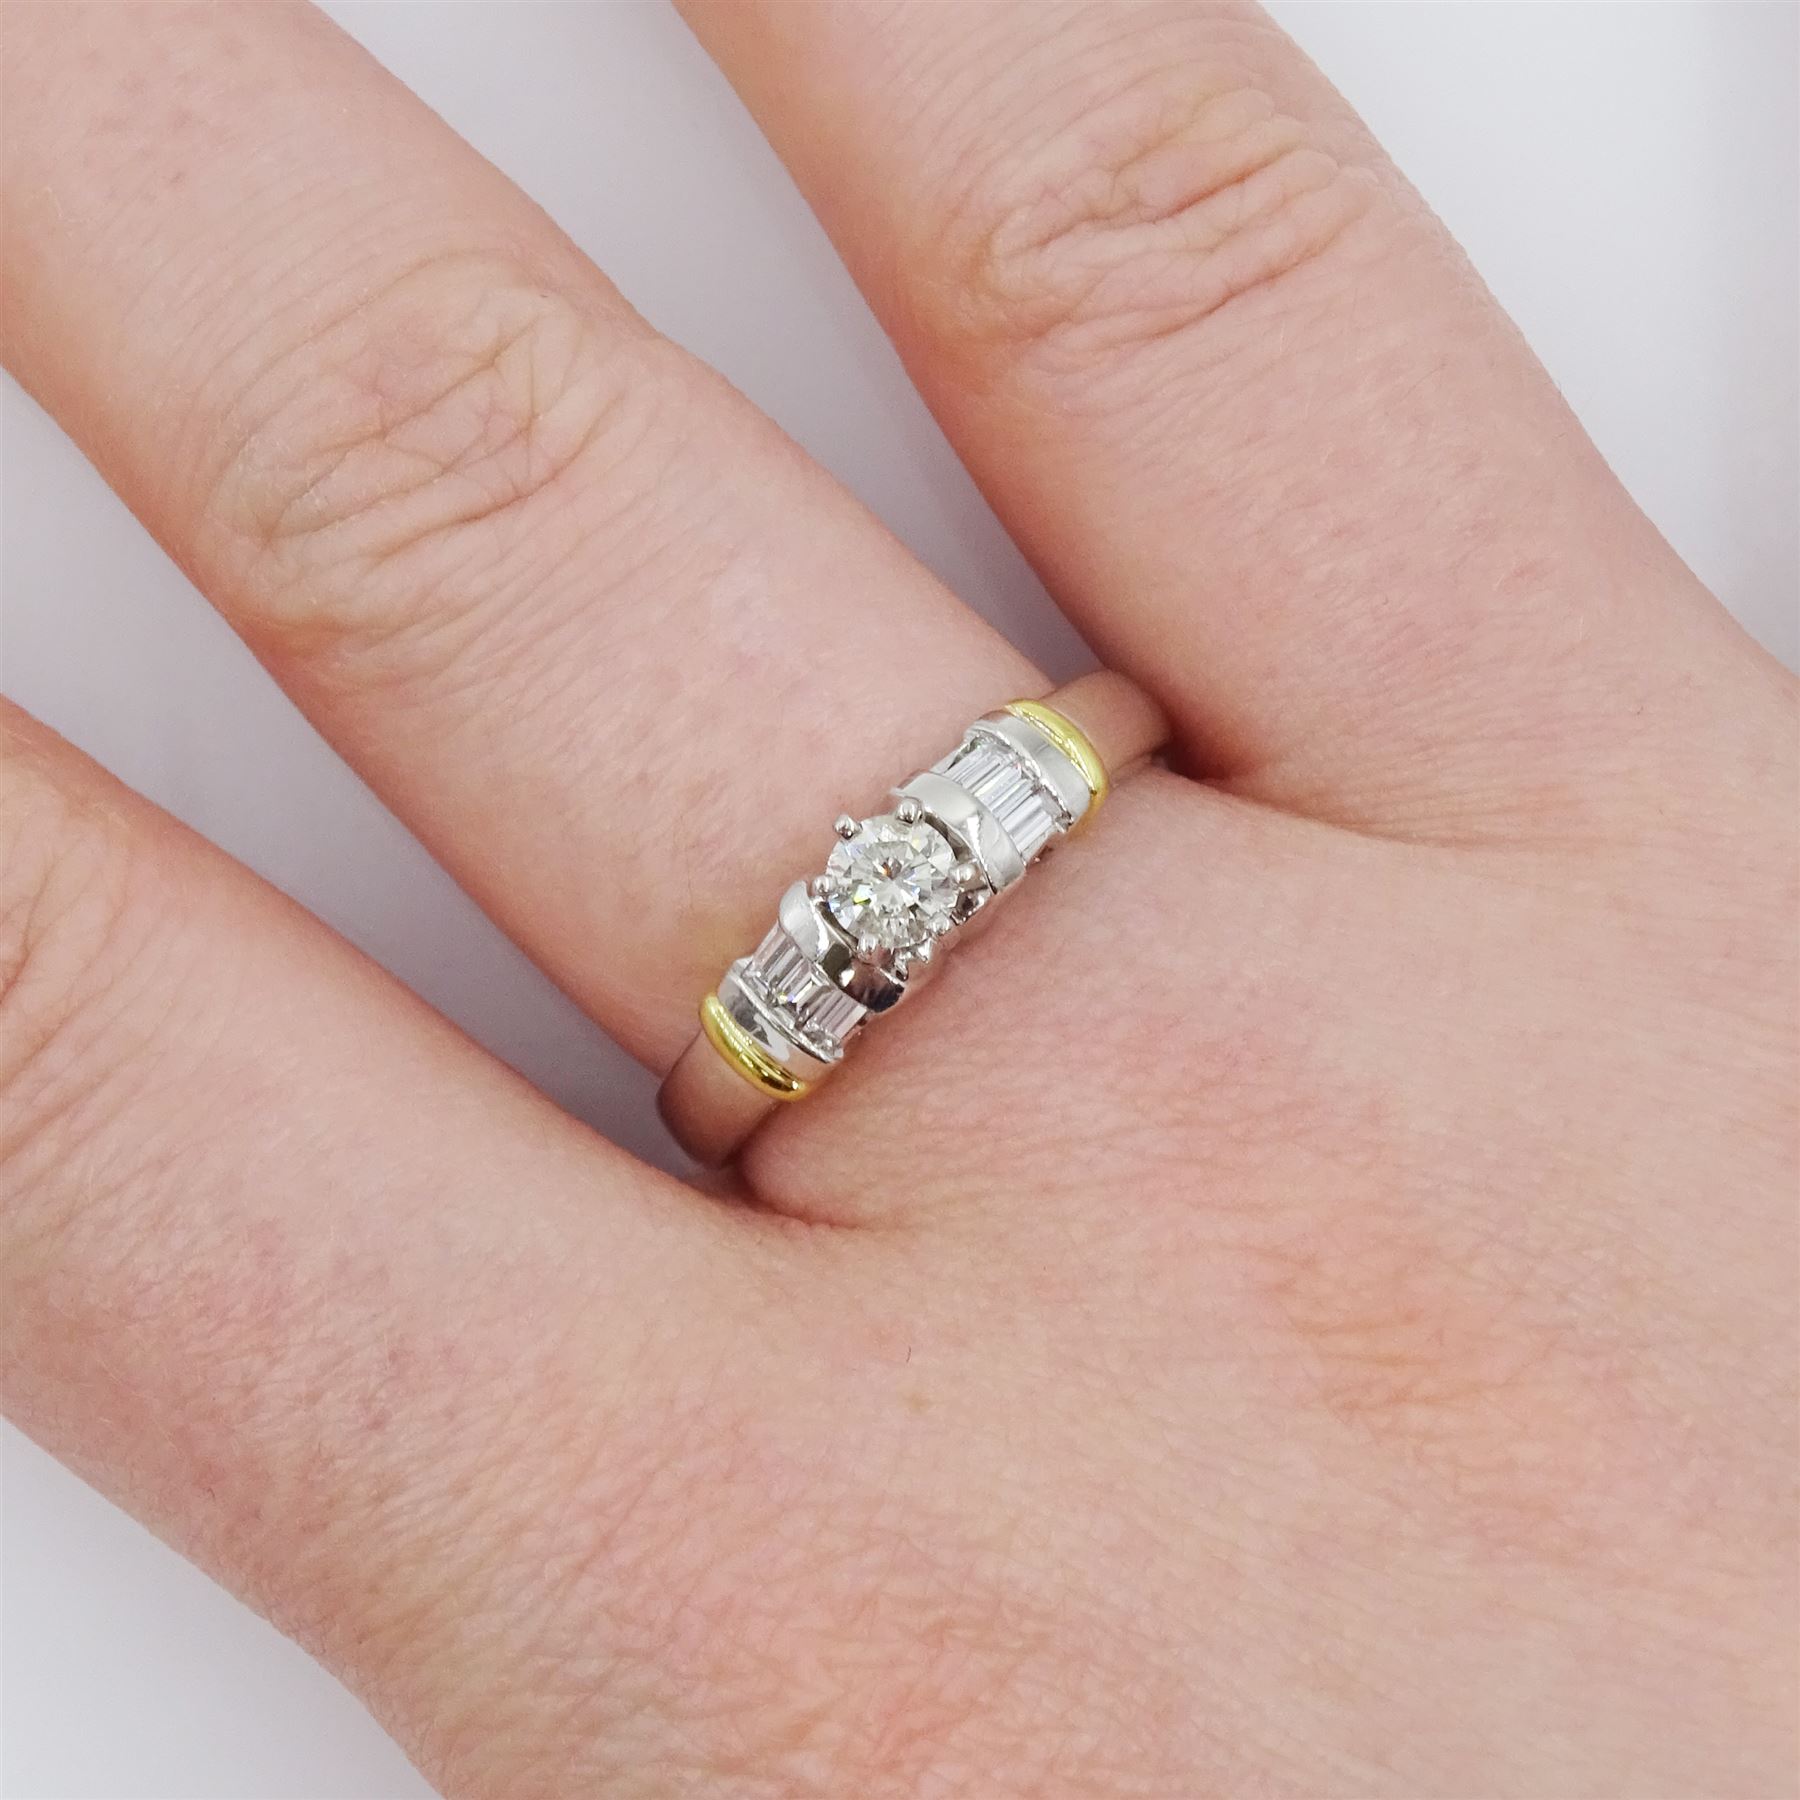 Platinum and 18ct gold single stone round brilliant cut diamond ring - Image 2 of 4